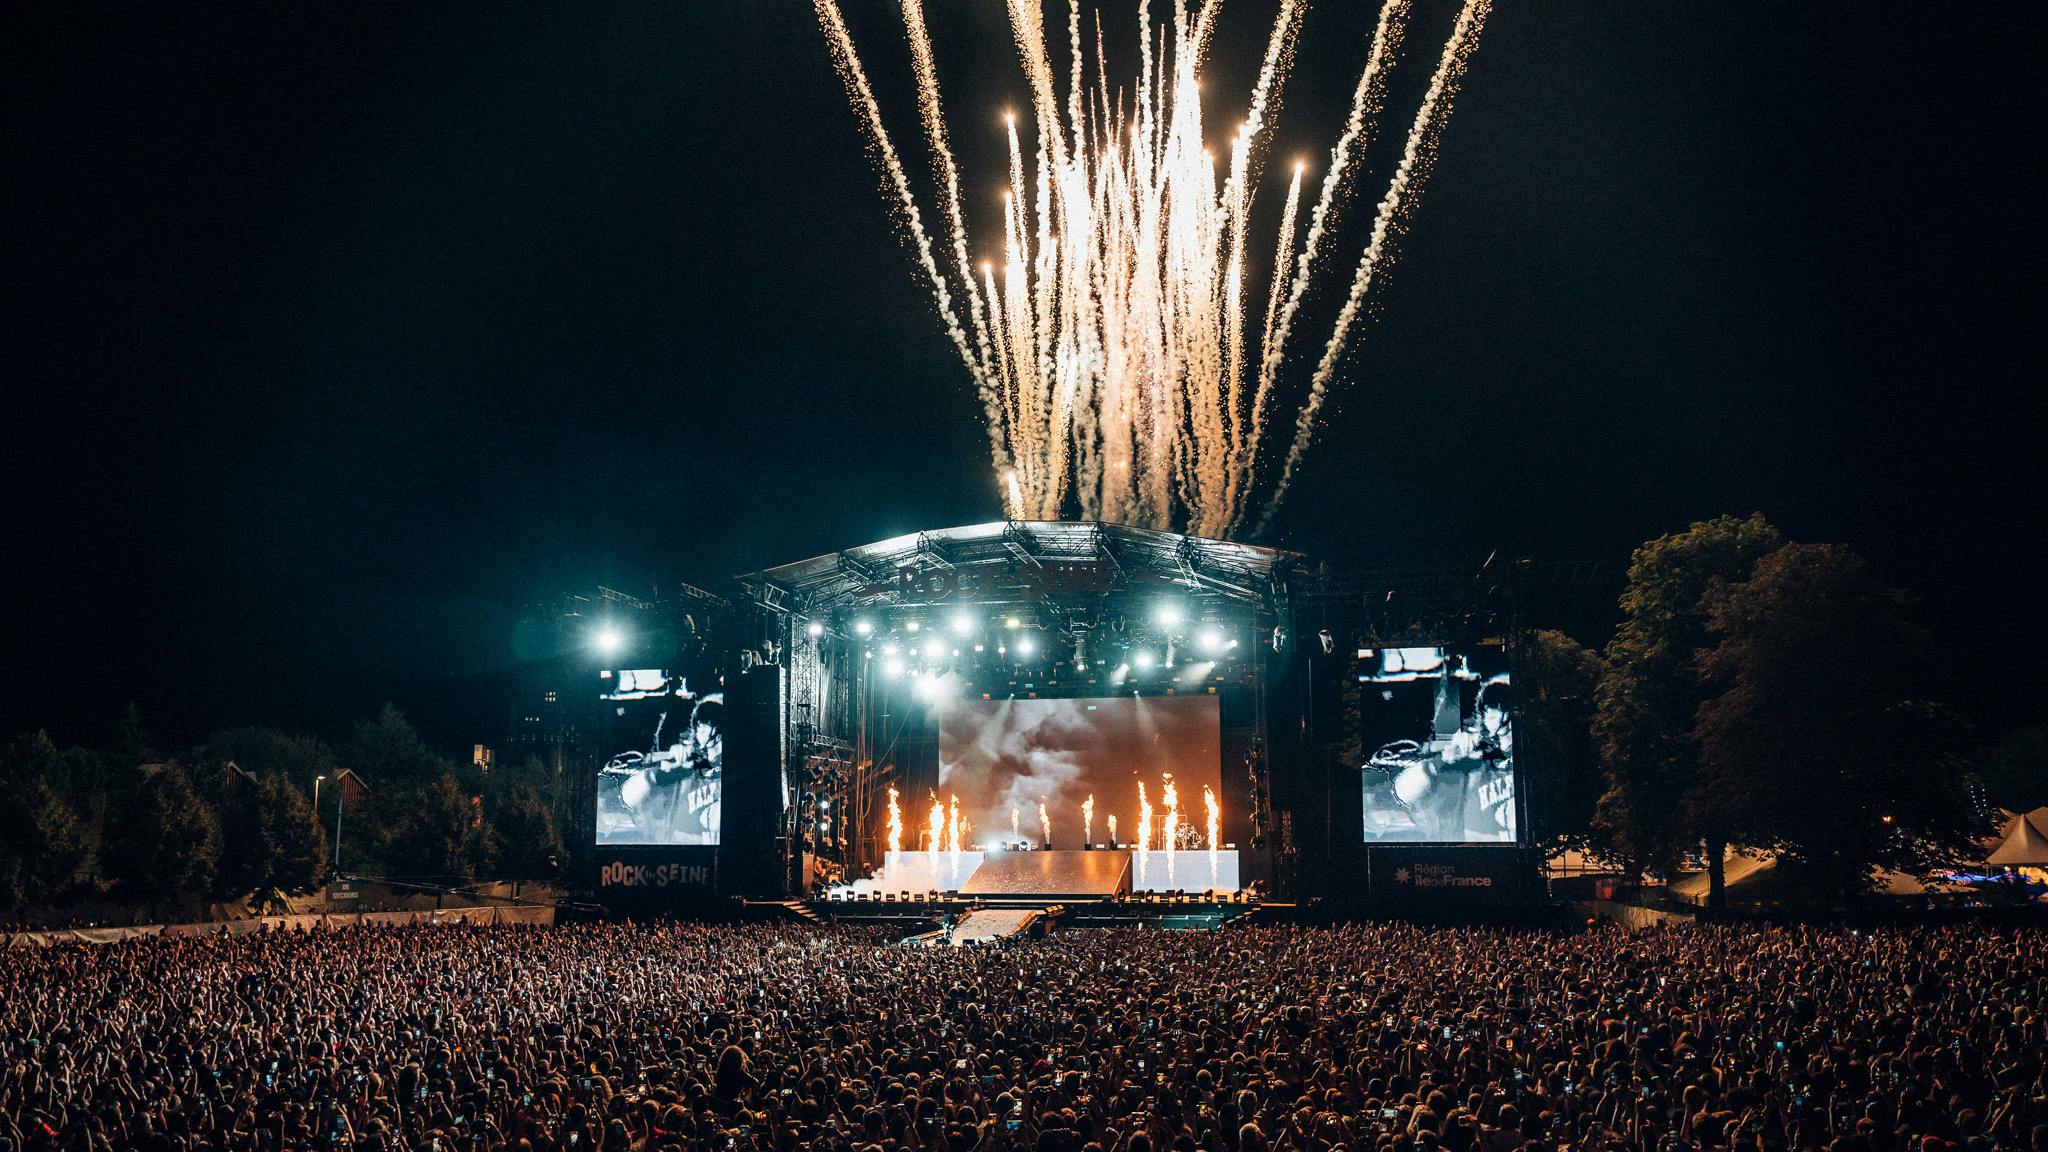 Måneskin, The Offspring and more announced for Paris festival Rock en Seine